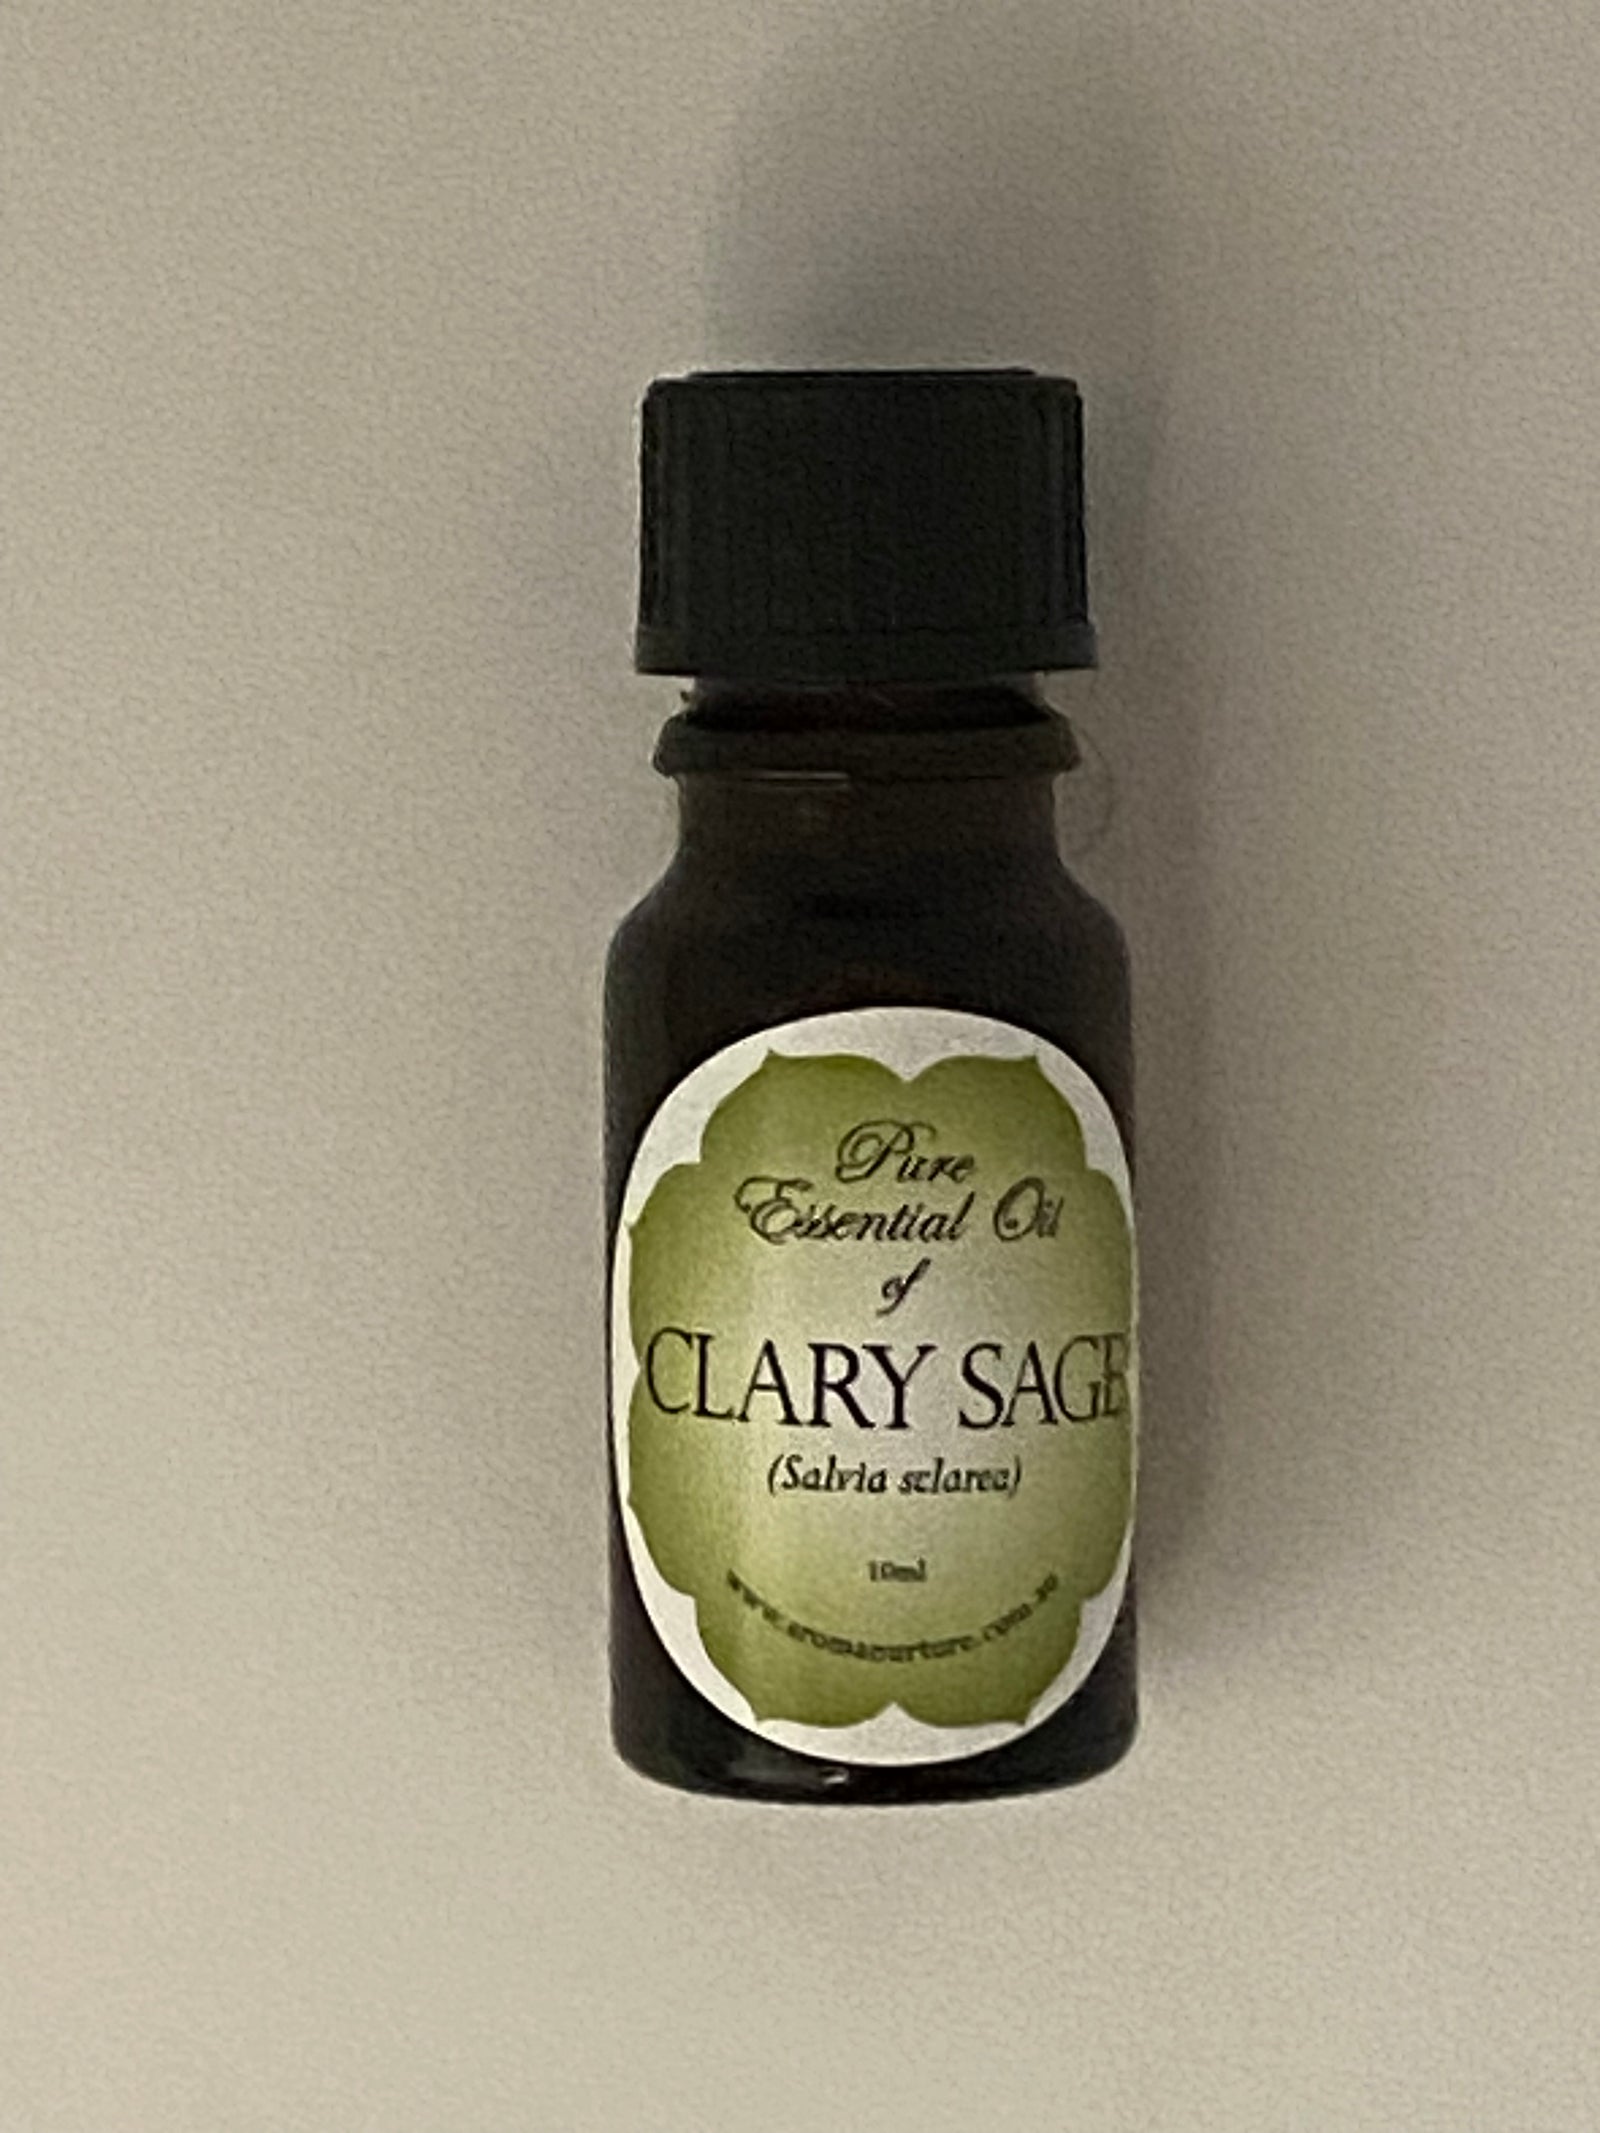 Pure essential oil of Clary Sage 10mls.(Salvia sclarea).